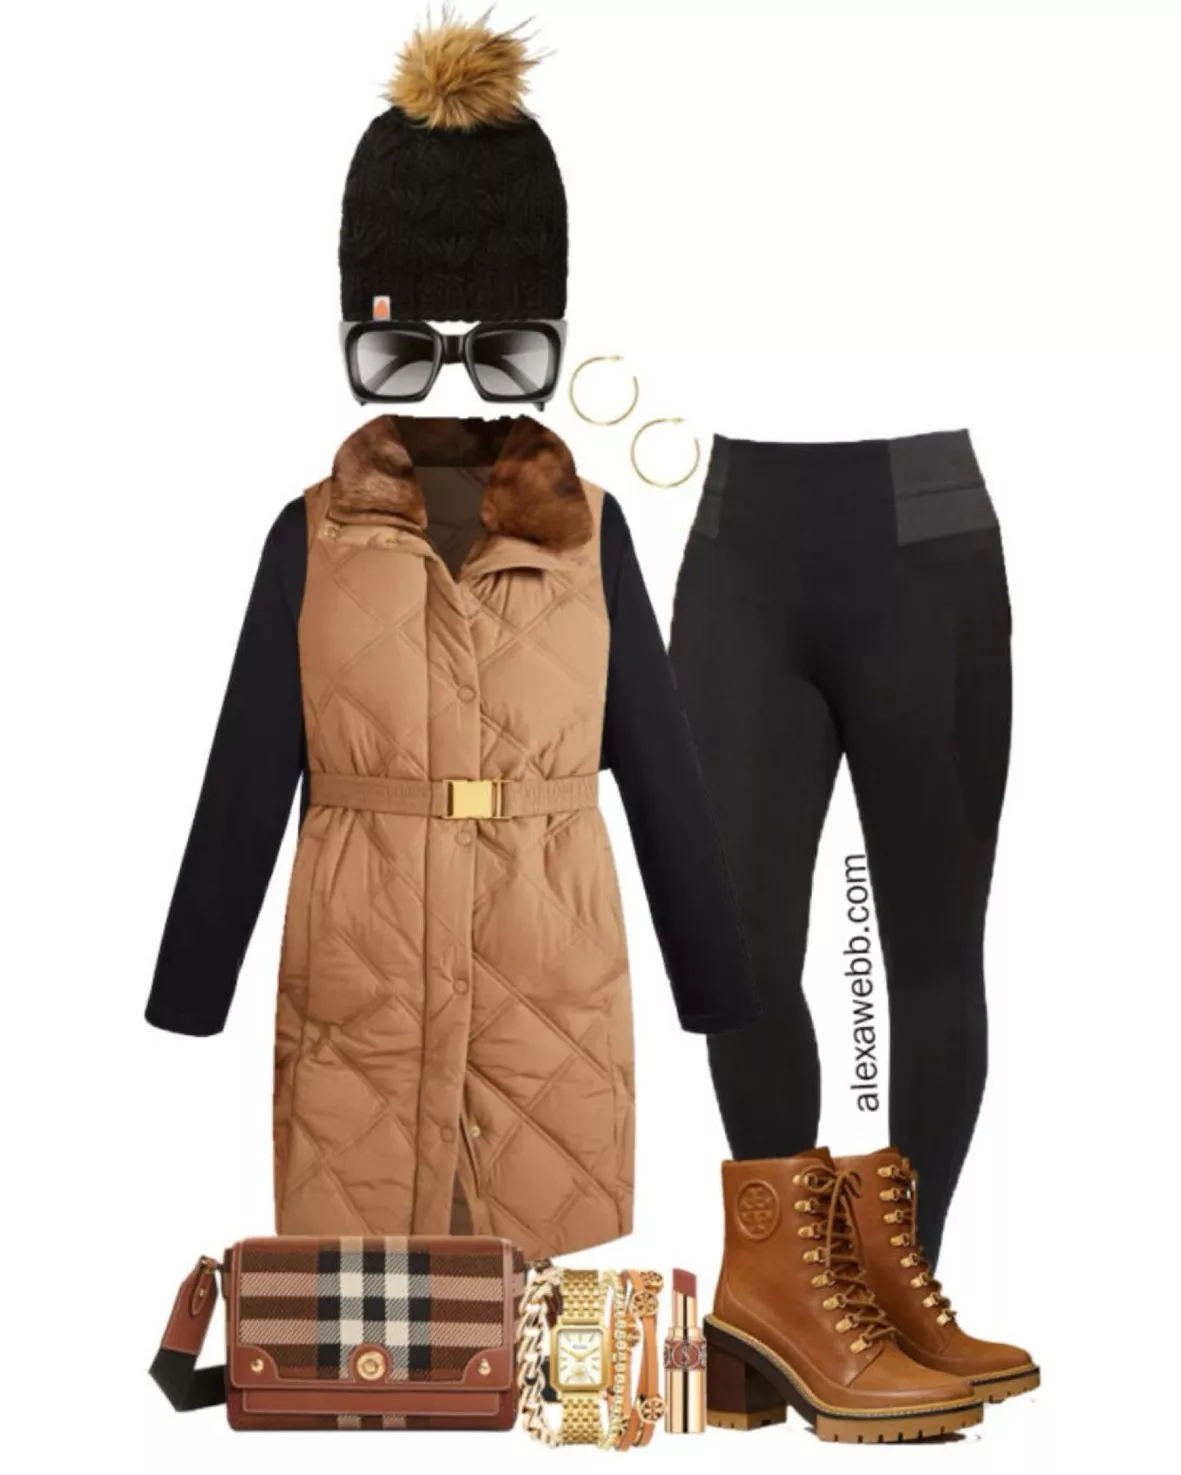 Plus Size Dark Winter Outfit - Alexa Webb